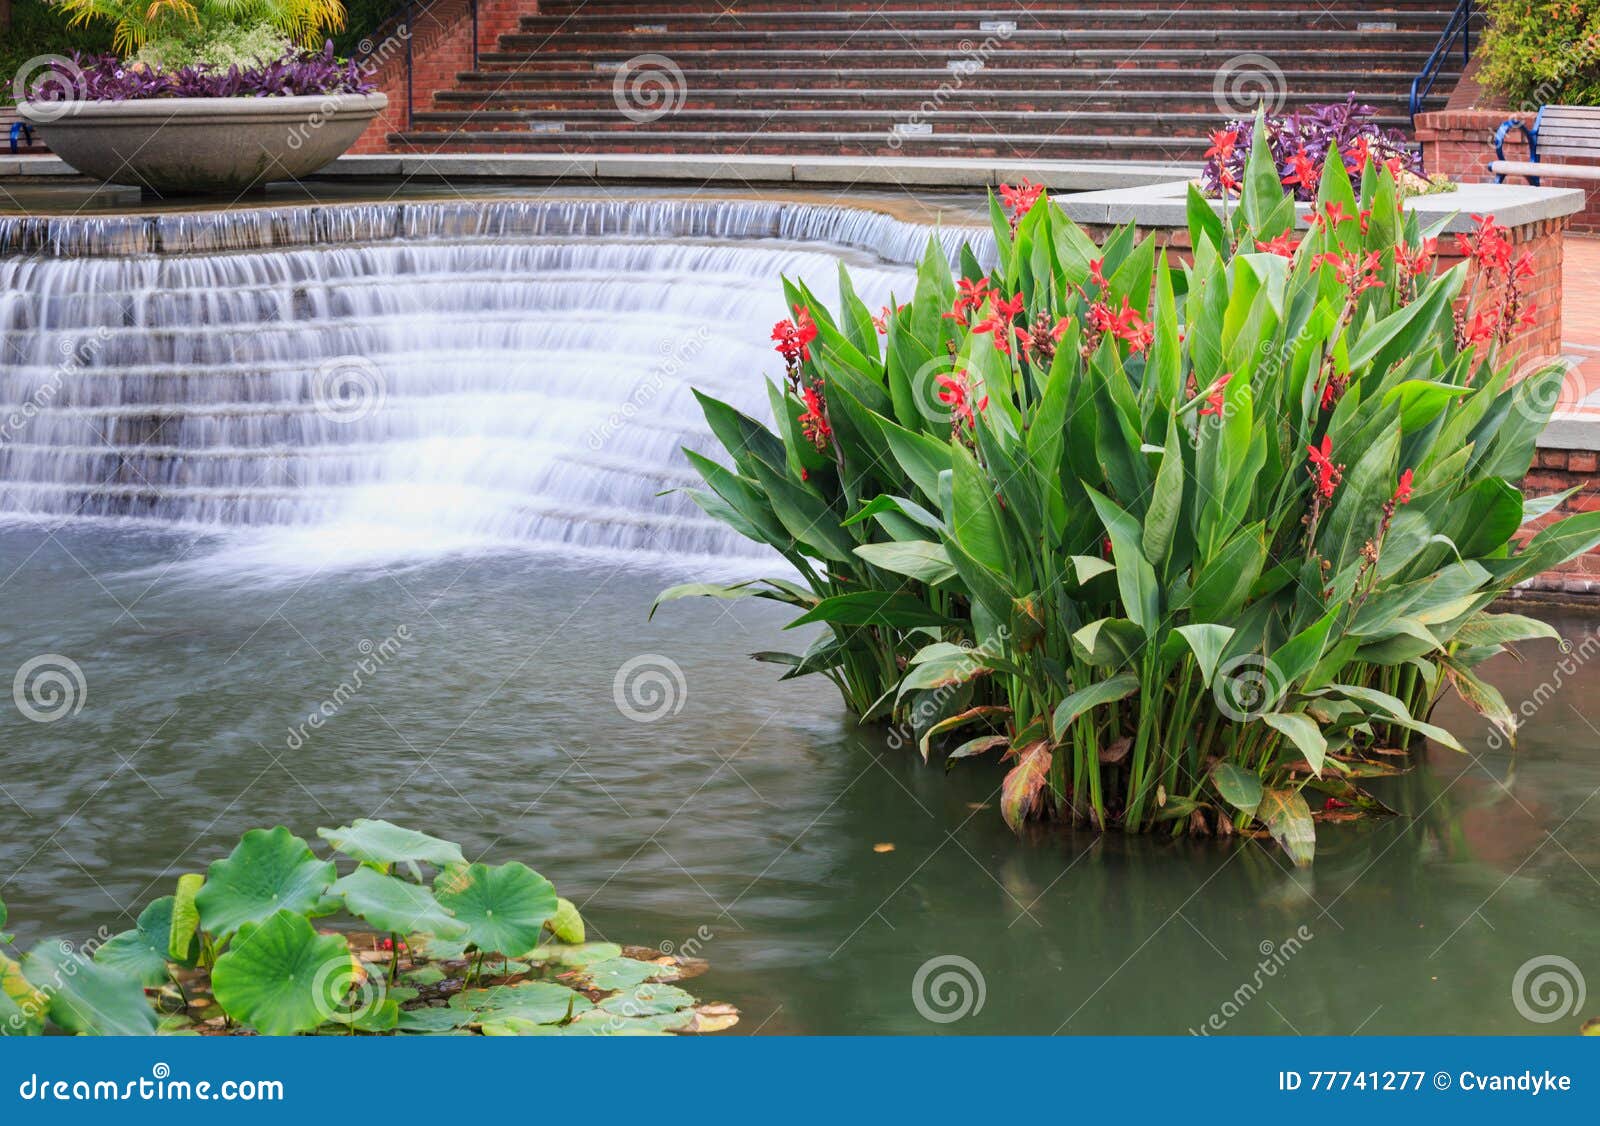 aquatic water garden frederick maryland